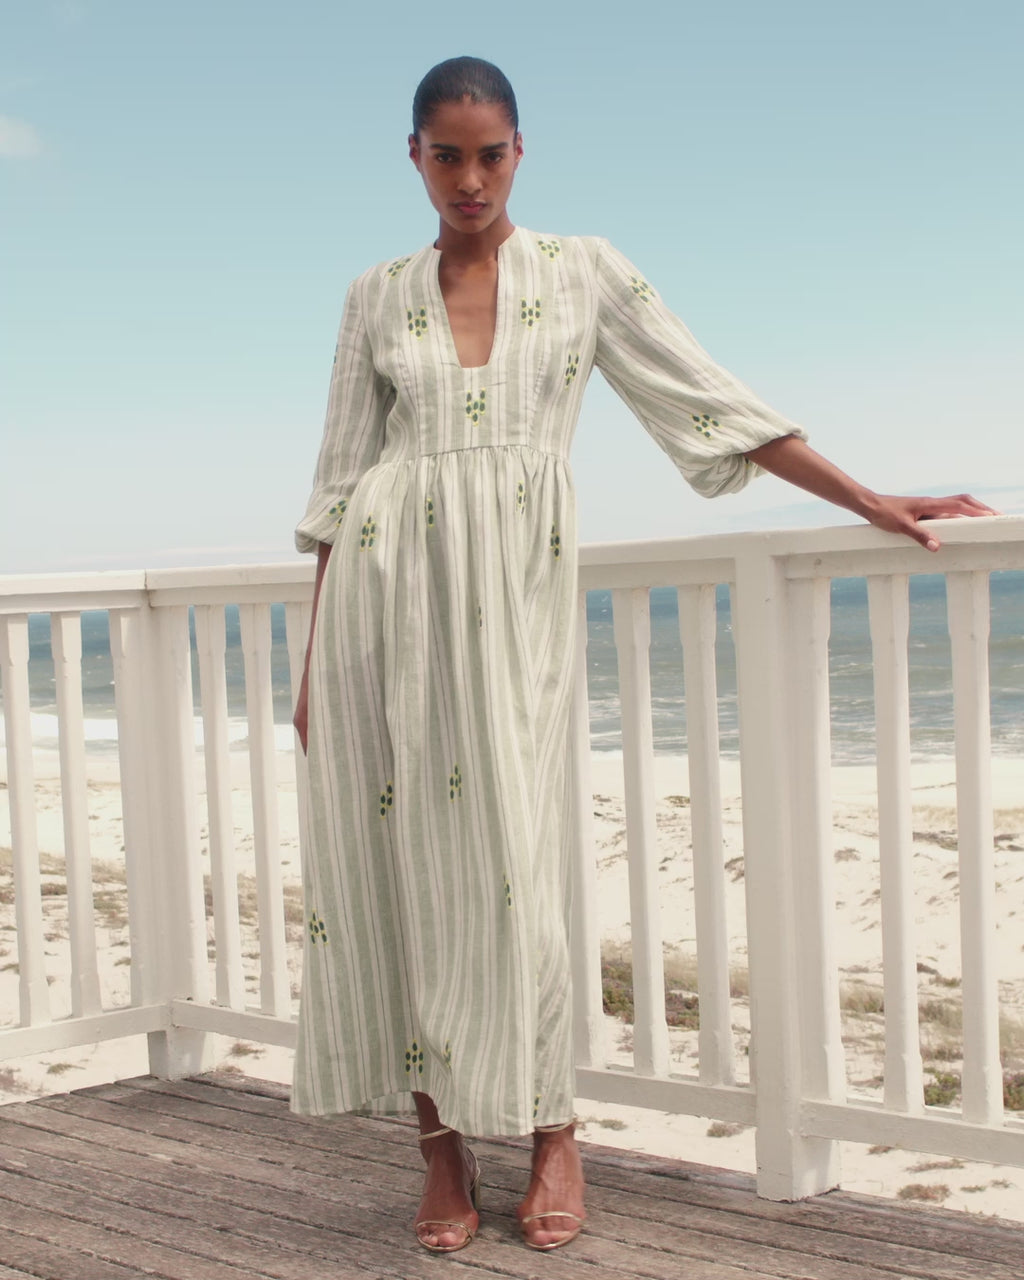 Wiggy Kit | Loulou Dress (Green Stripe) | Model wearing striped beige maxi dress with beach in background.